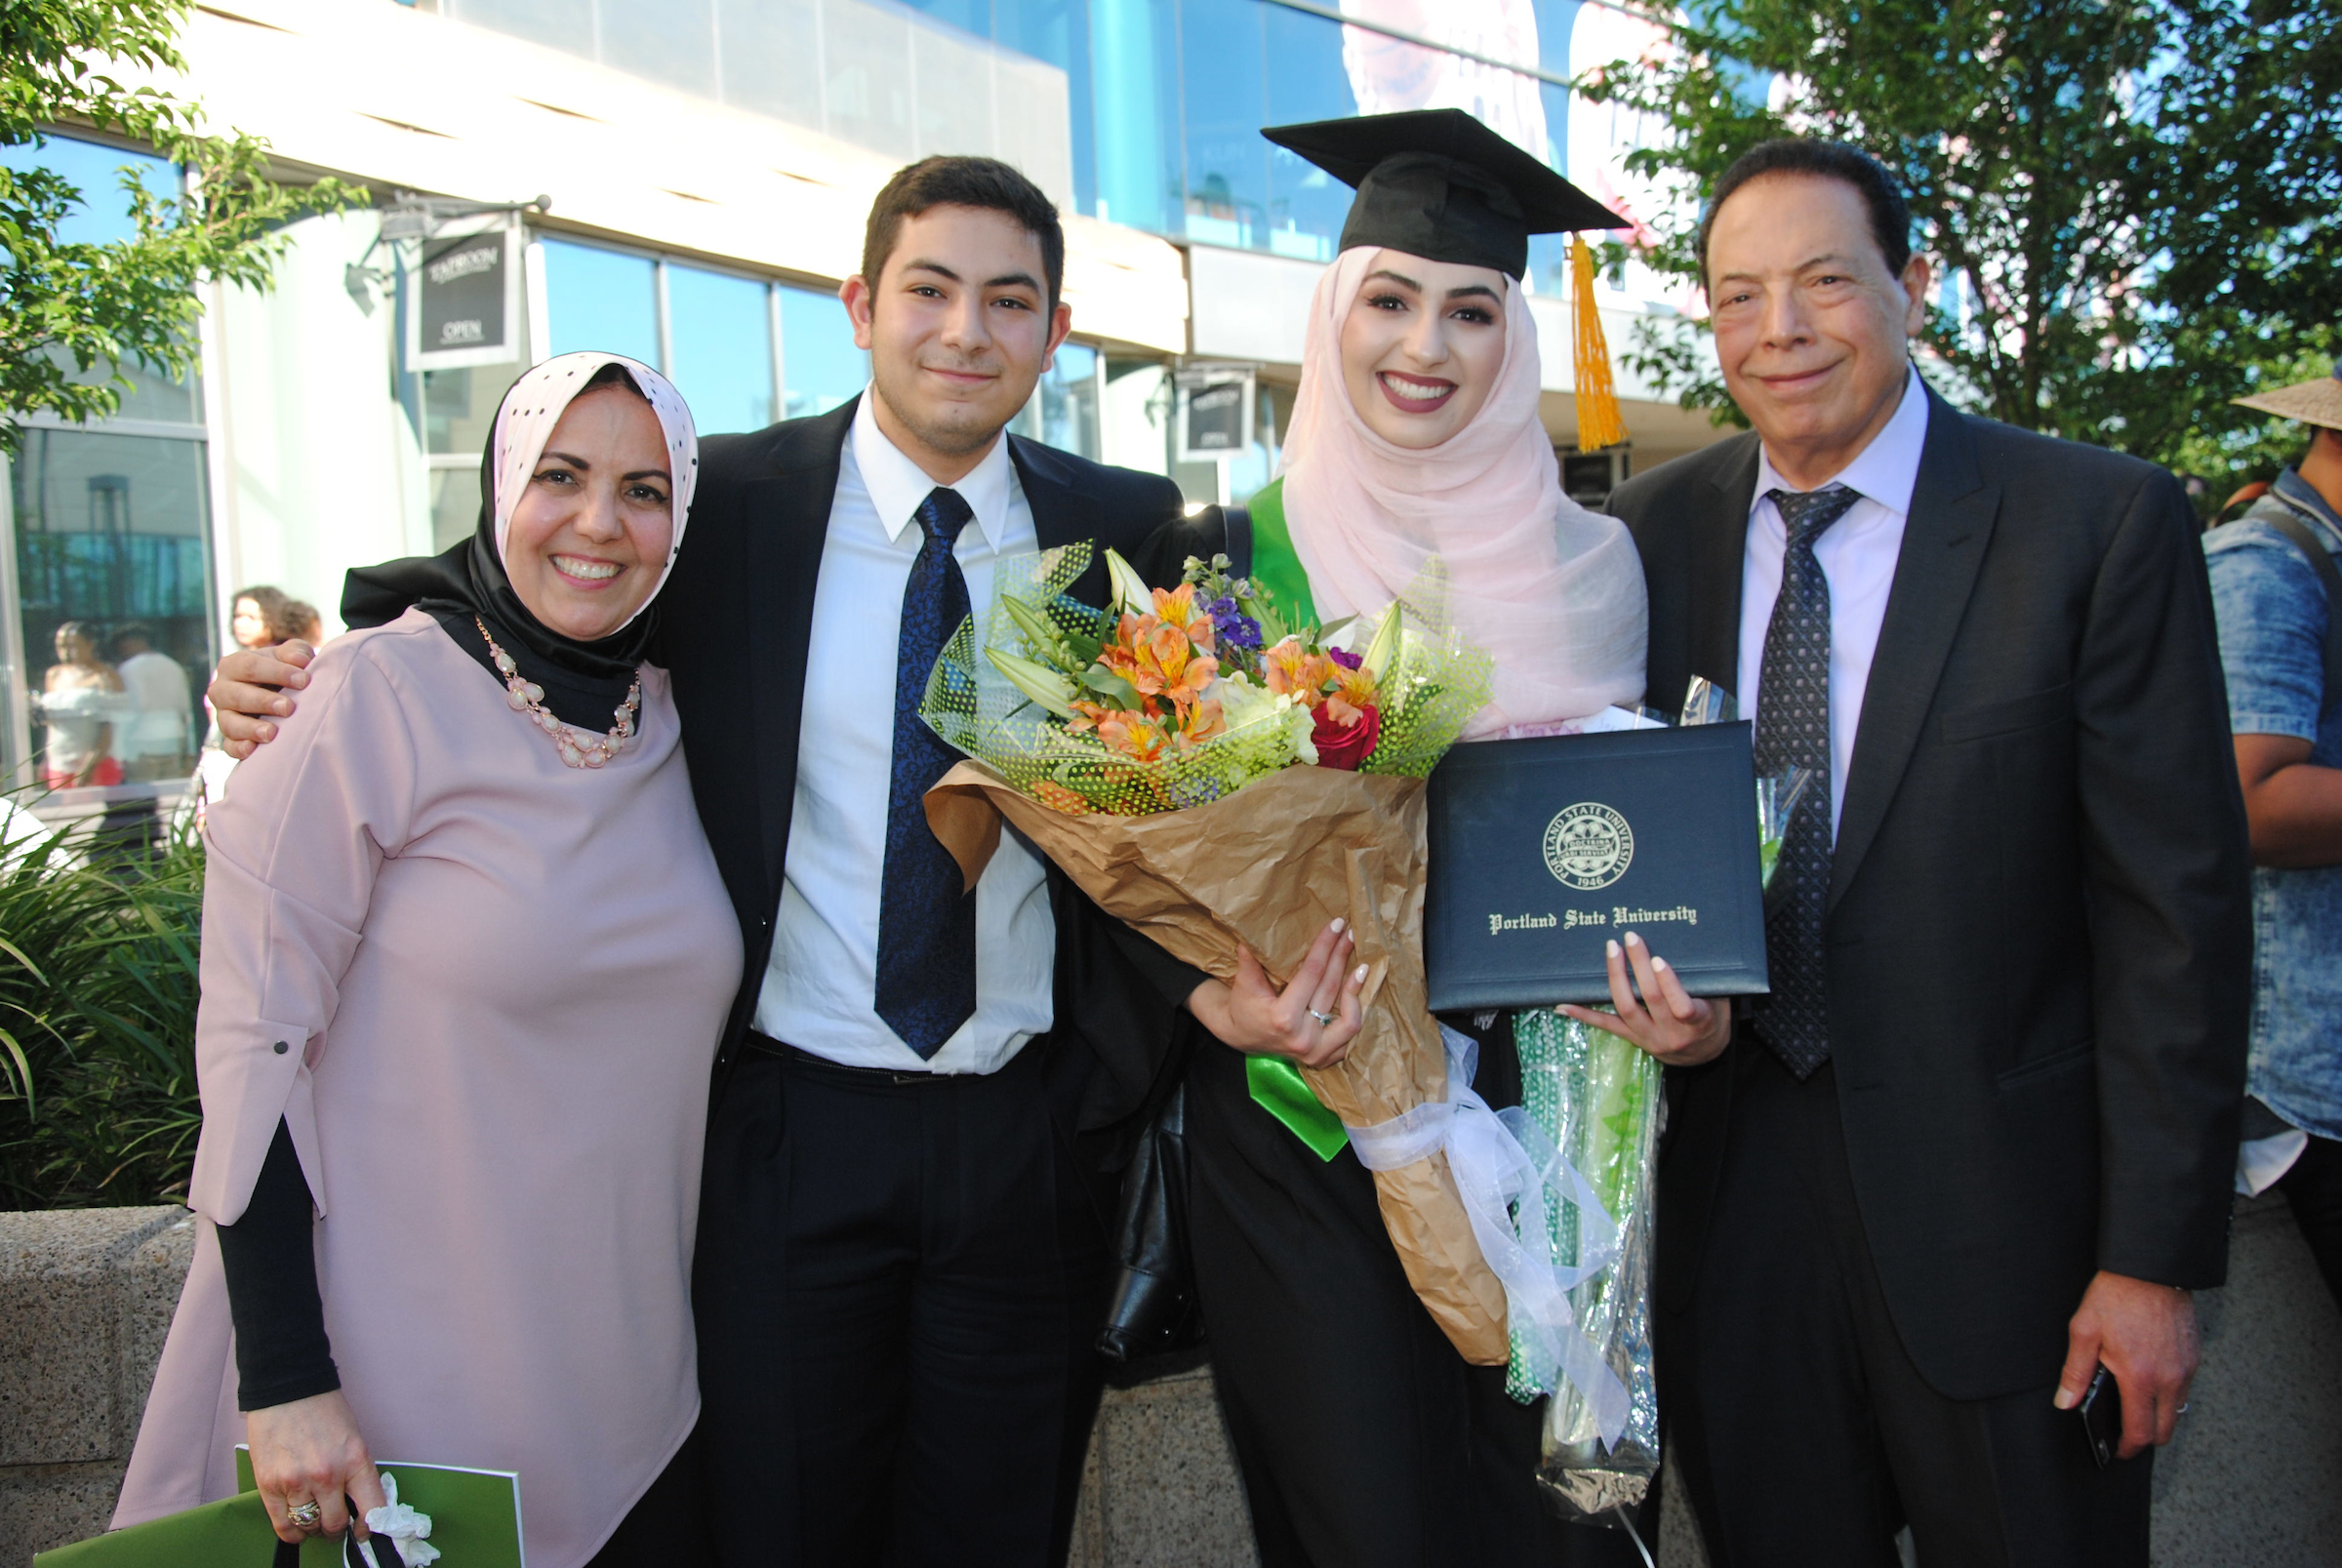 International student graduate celebrating with family members